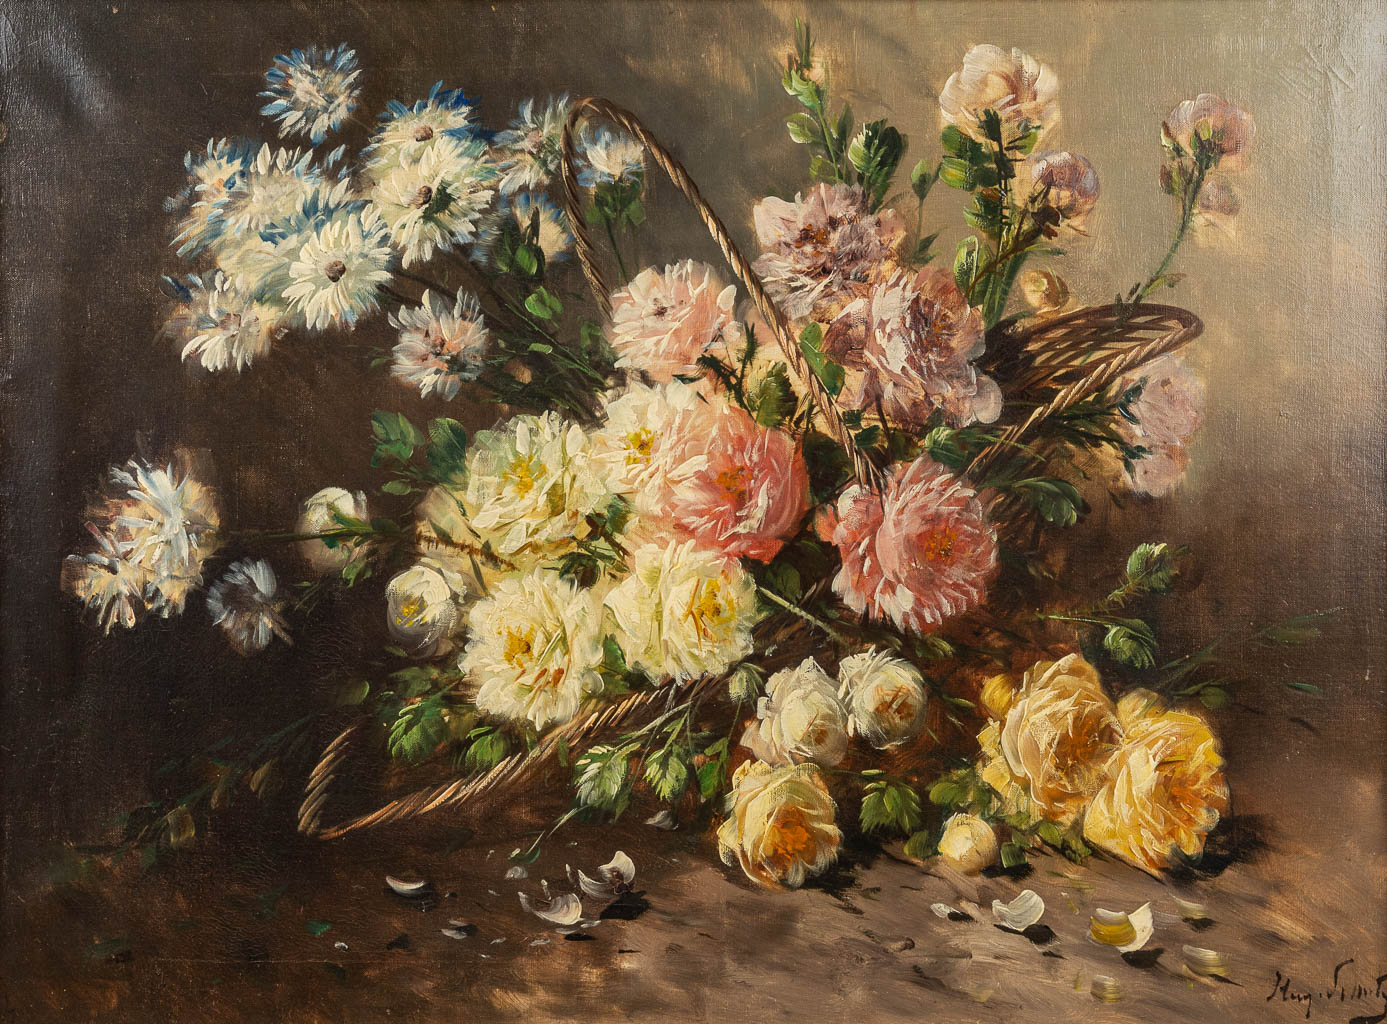 Henry SCHOUTEN (1857/64-1927) 'Flower Still life' oil on canvas. (W:80 x H:60 cm)